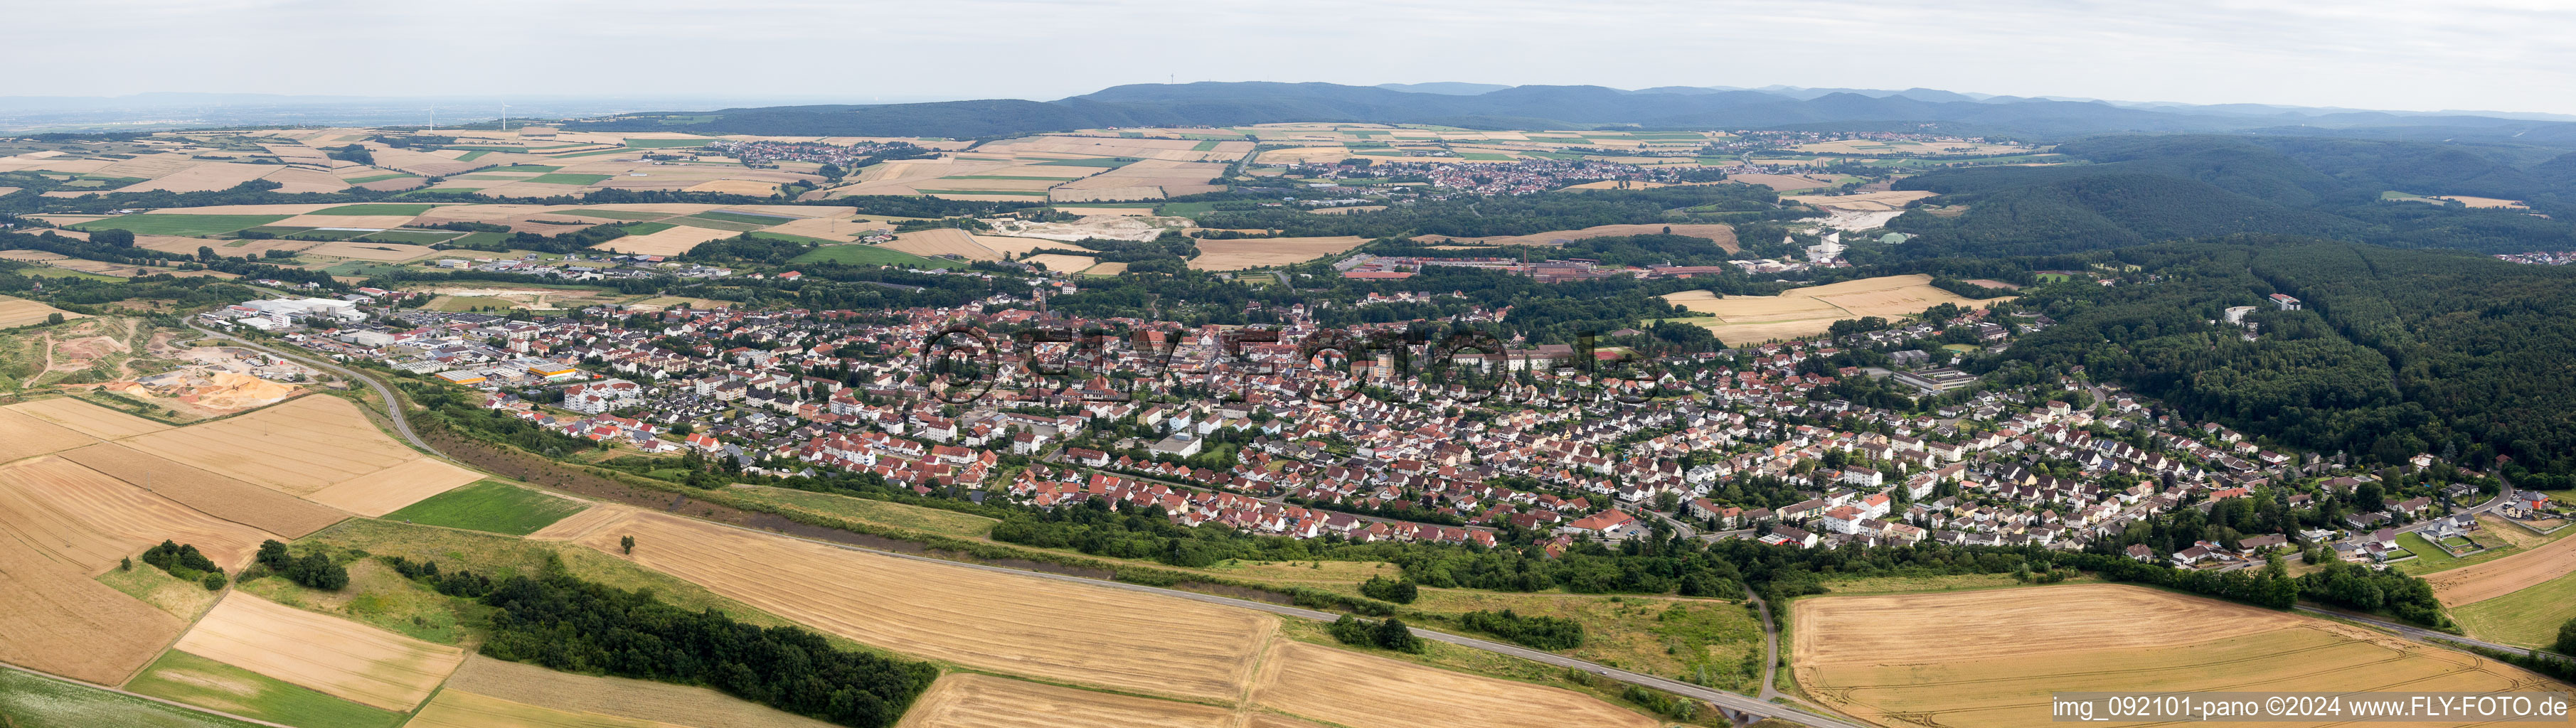 Panorami perspective of Eisenberg (Pfalz) in the state Rhineland-Palatinate